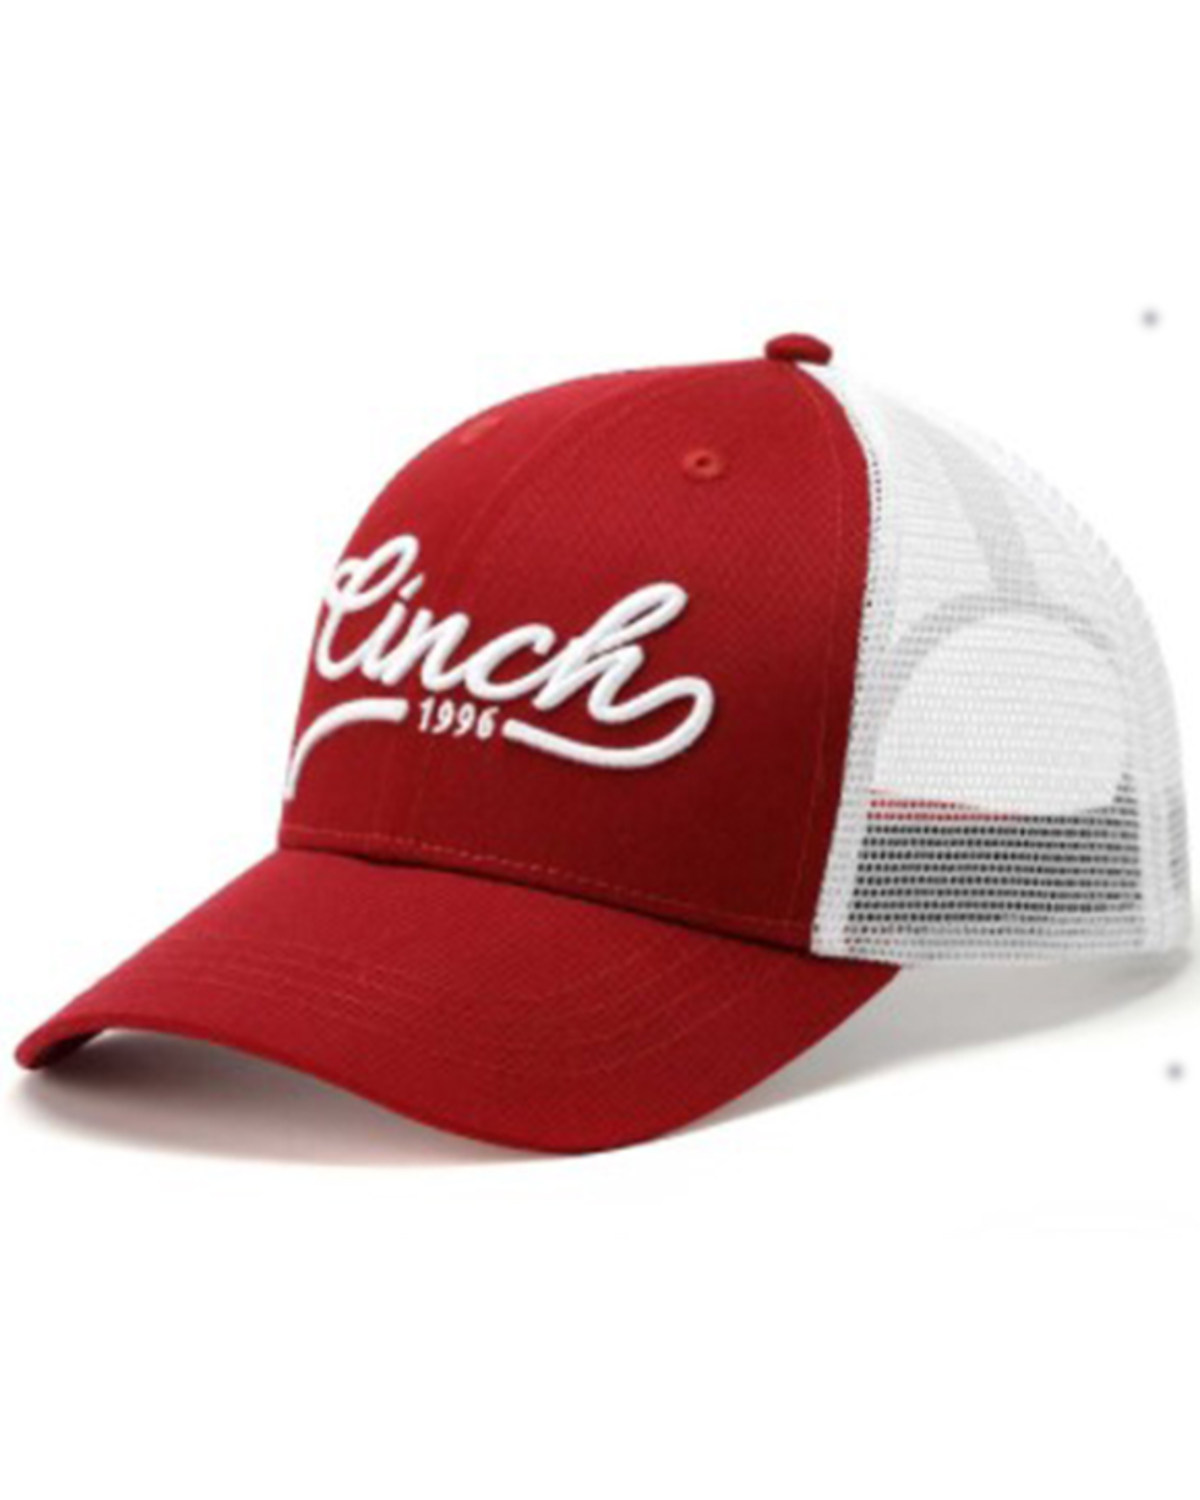 Cinch Men's Embroidered Logo Ball Cap